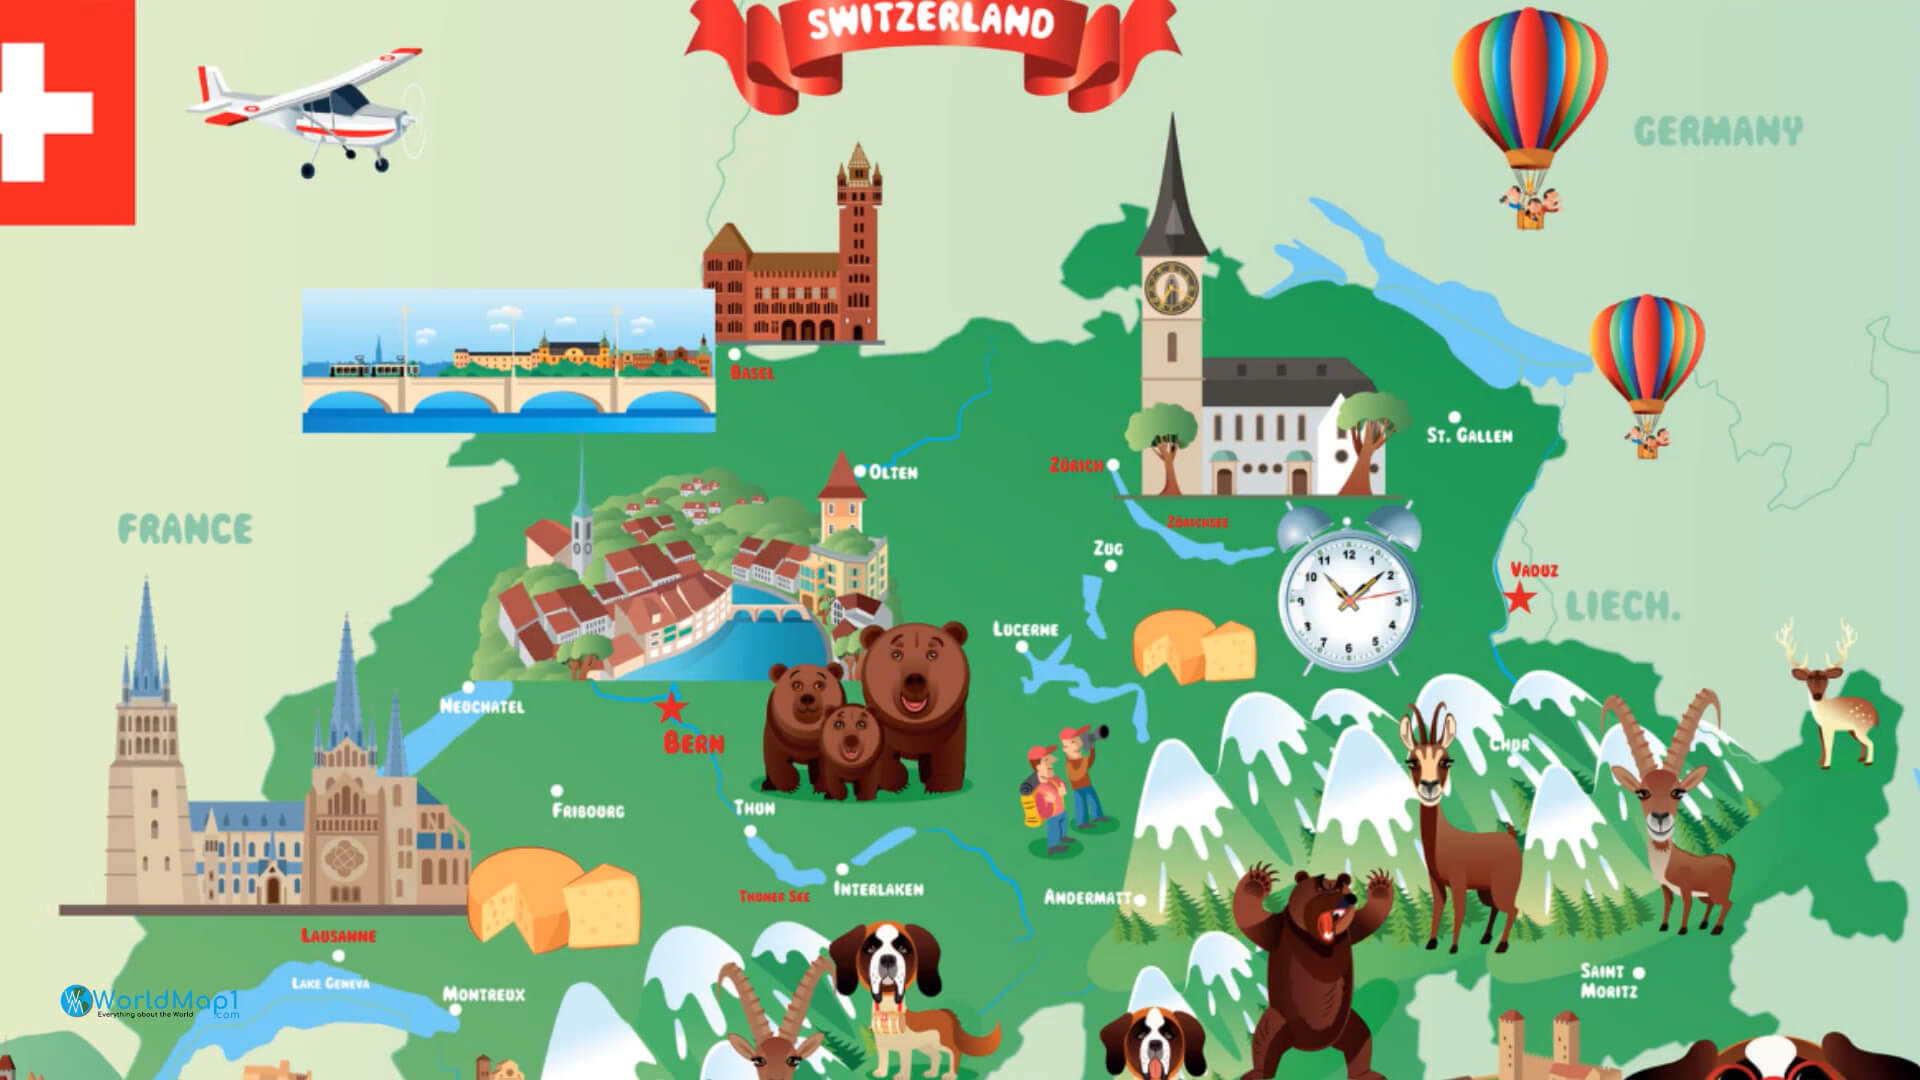 Switzerland Tourism Map